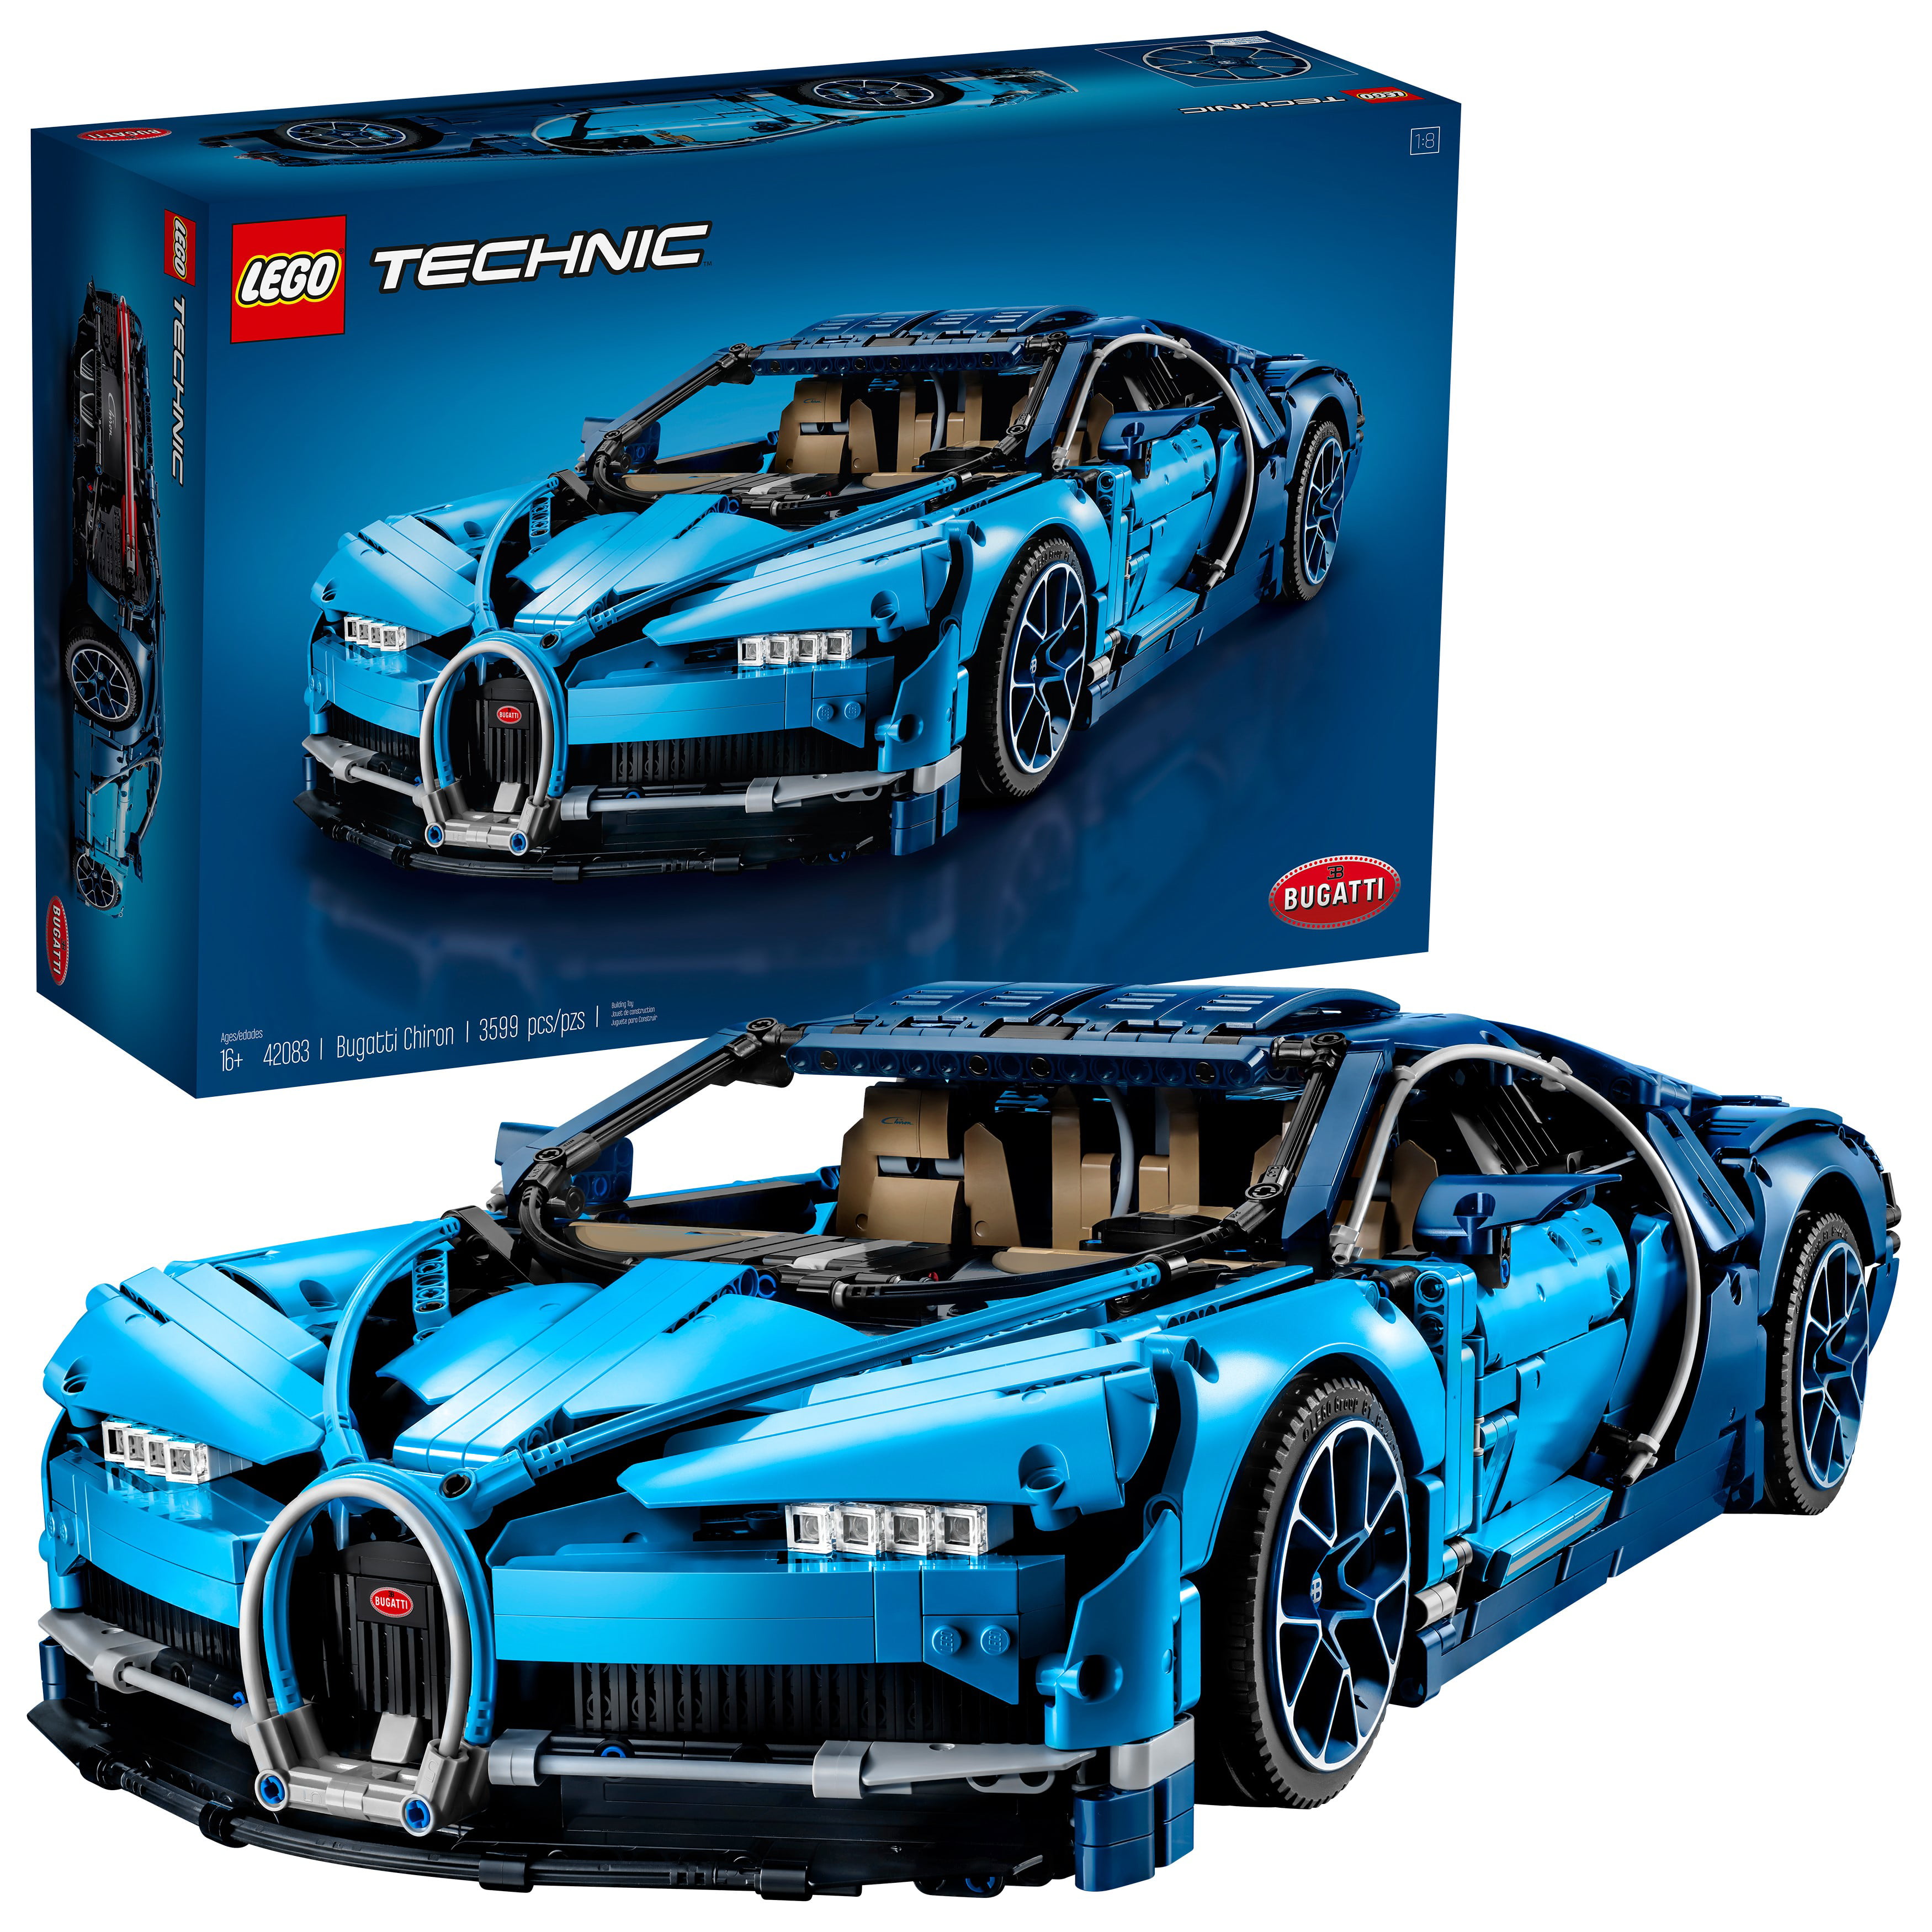 2018 Bugatti Chiron Lego Technic kit revealed - Autoblog